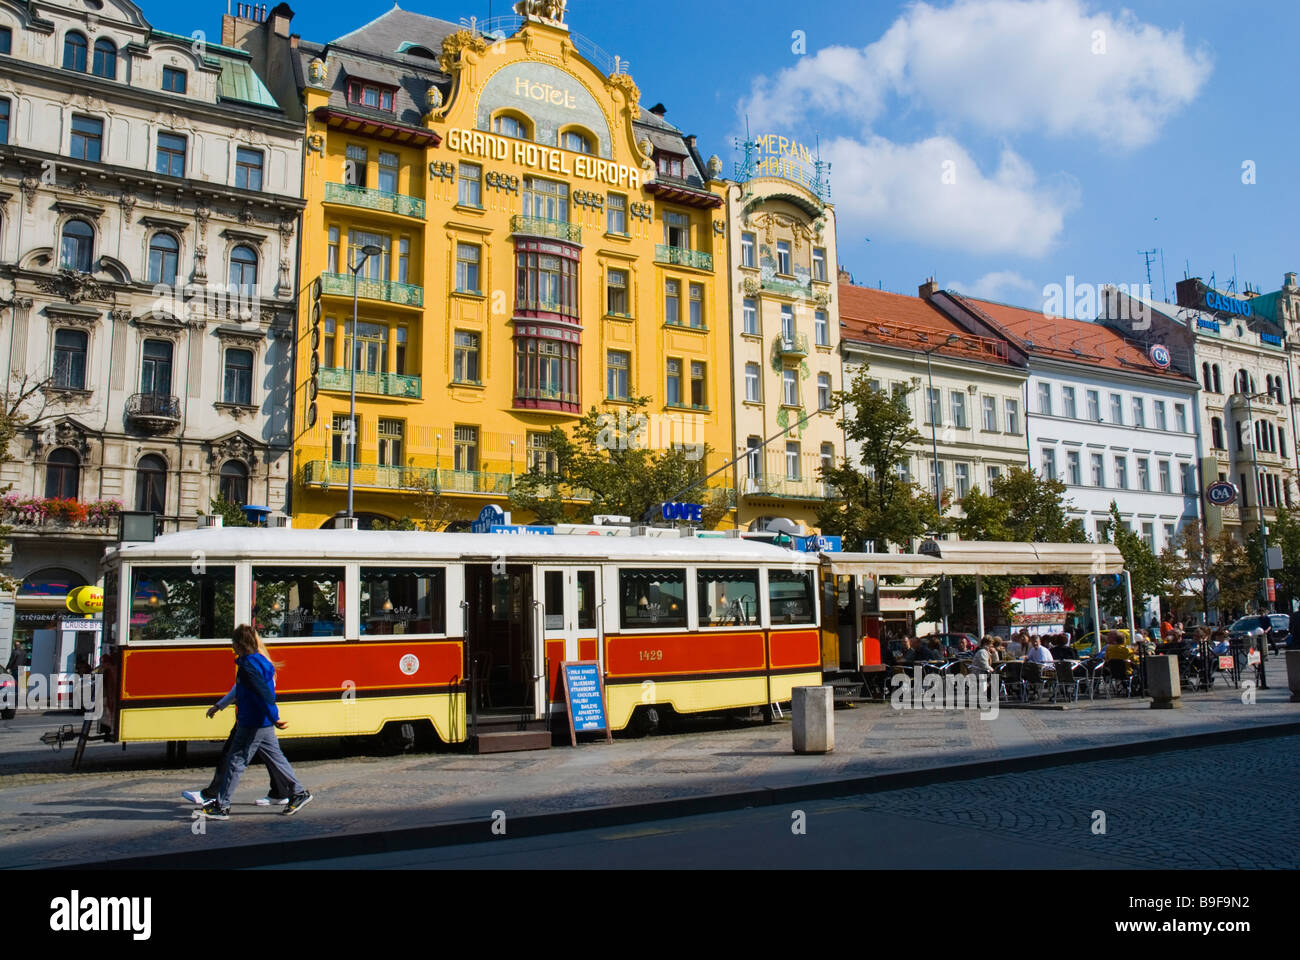 Cafe Tramvaj at Vaclavske namesti square in central Prague Czech Republic Europe Stock Photo